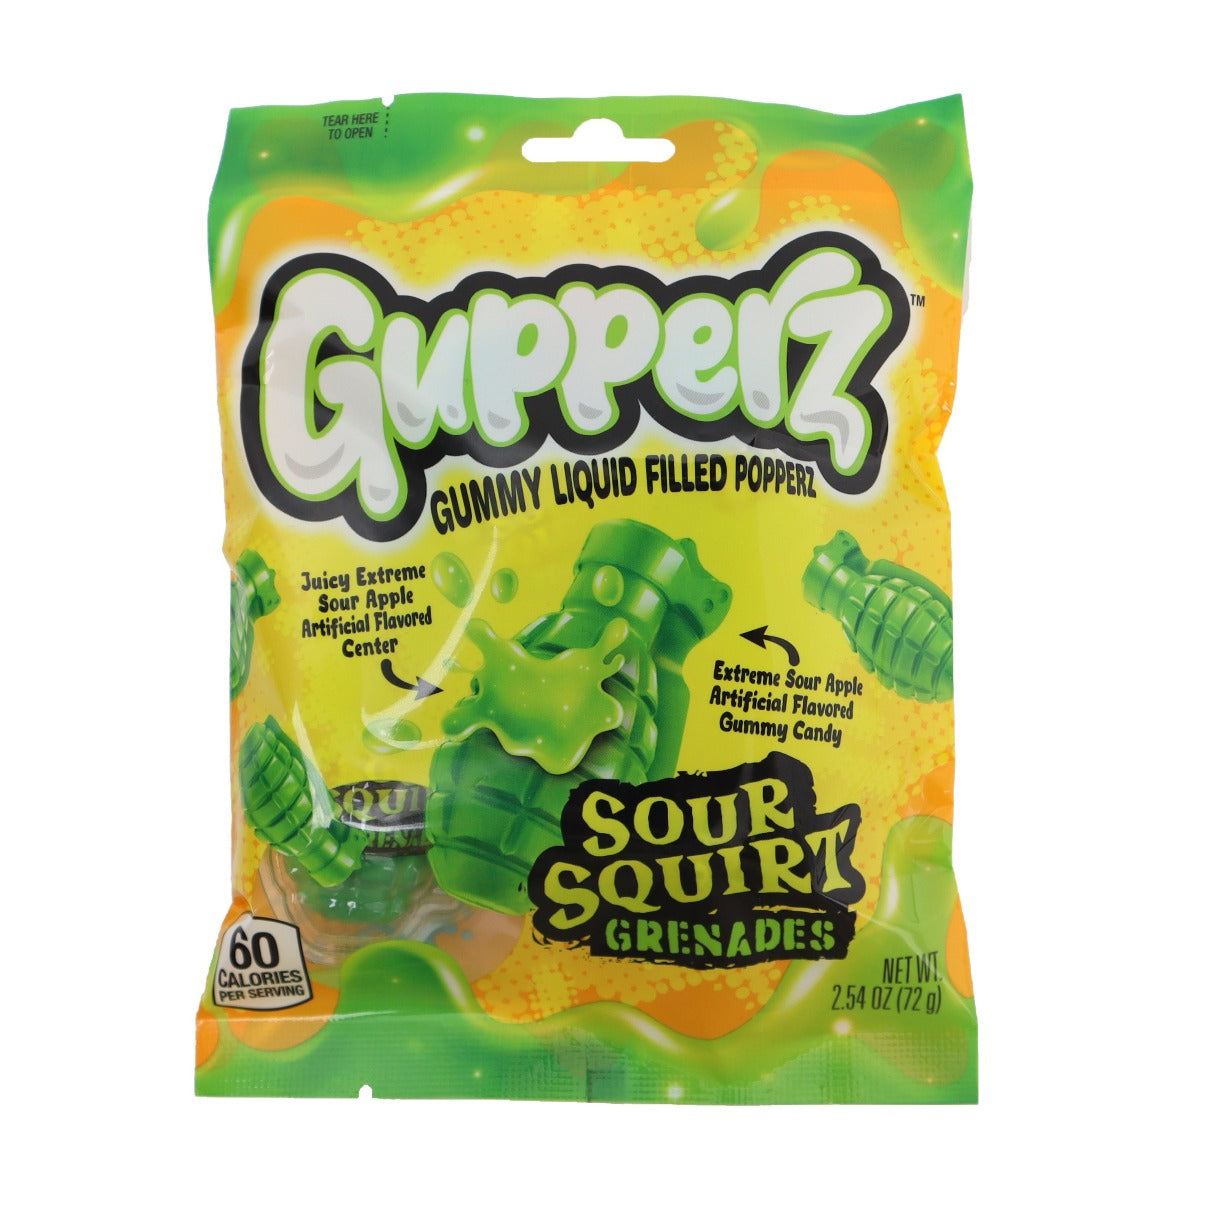 Gupperz Sour Squirt Grenades Peg Bag 2.54oz - 12ct